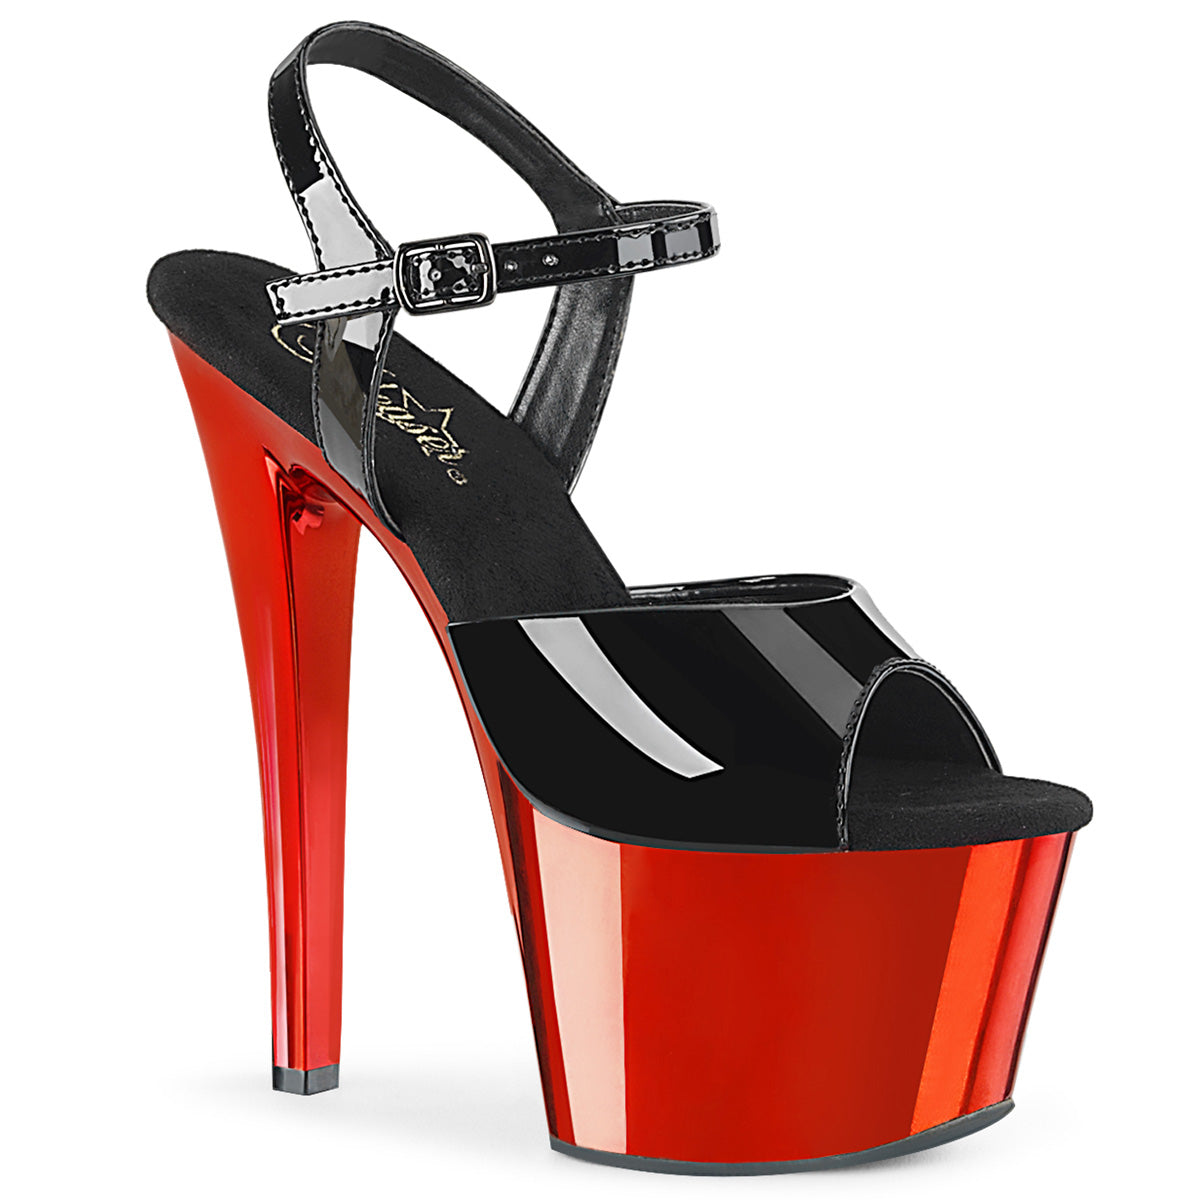 SKY-309 Black Patent/Red Chrome Platform Sandal